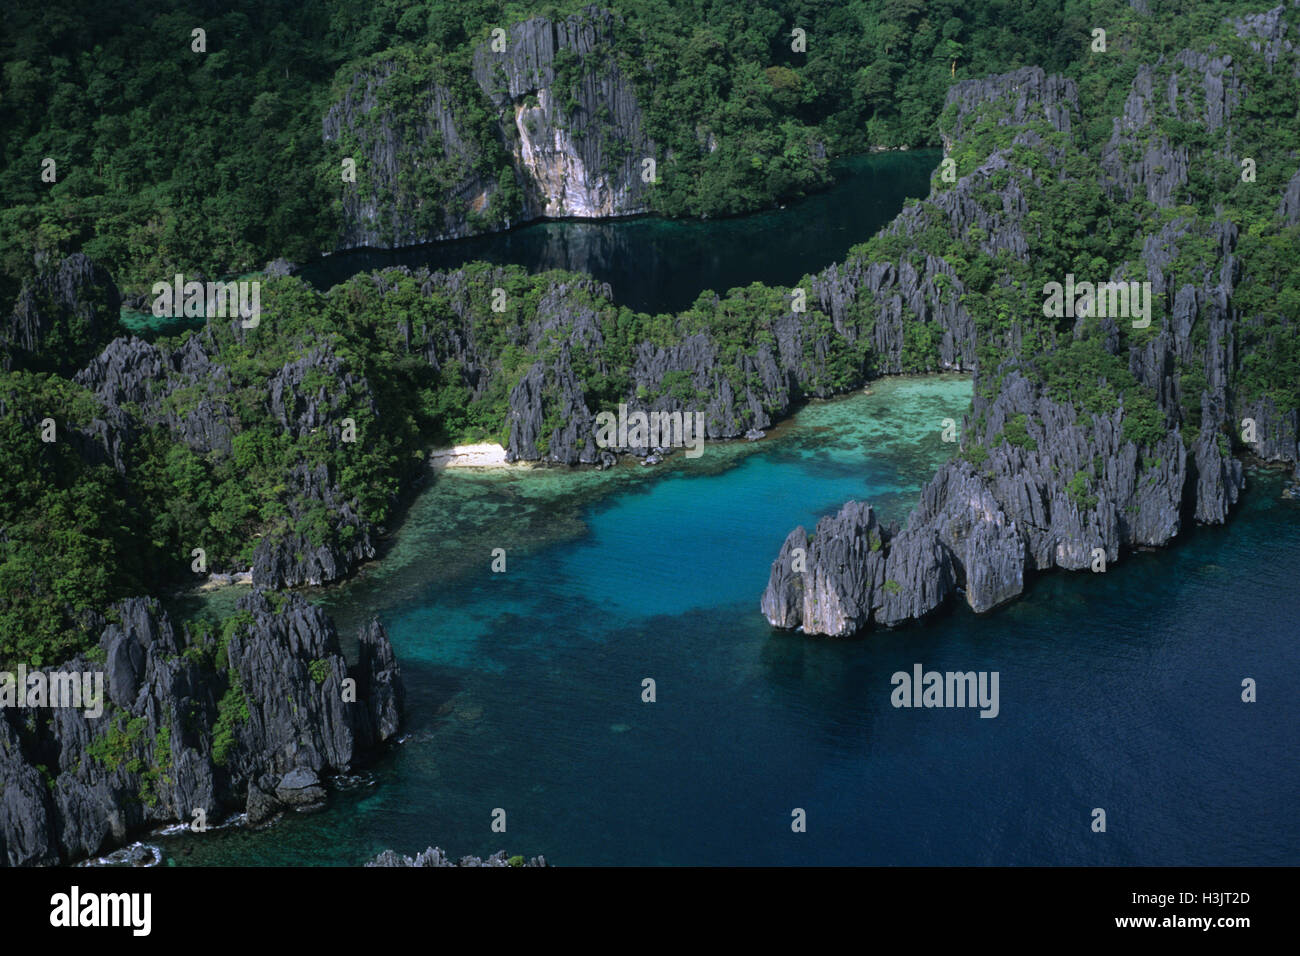 Aerial photograph of lagoons at Miniloc Island Resort. Stock Photo